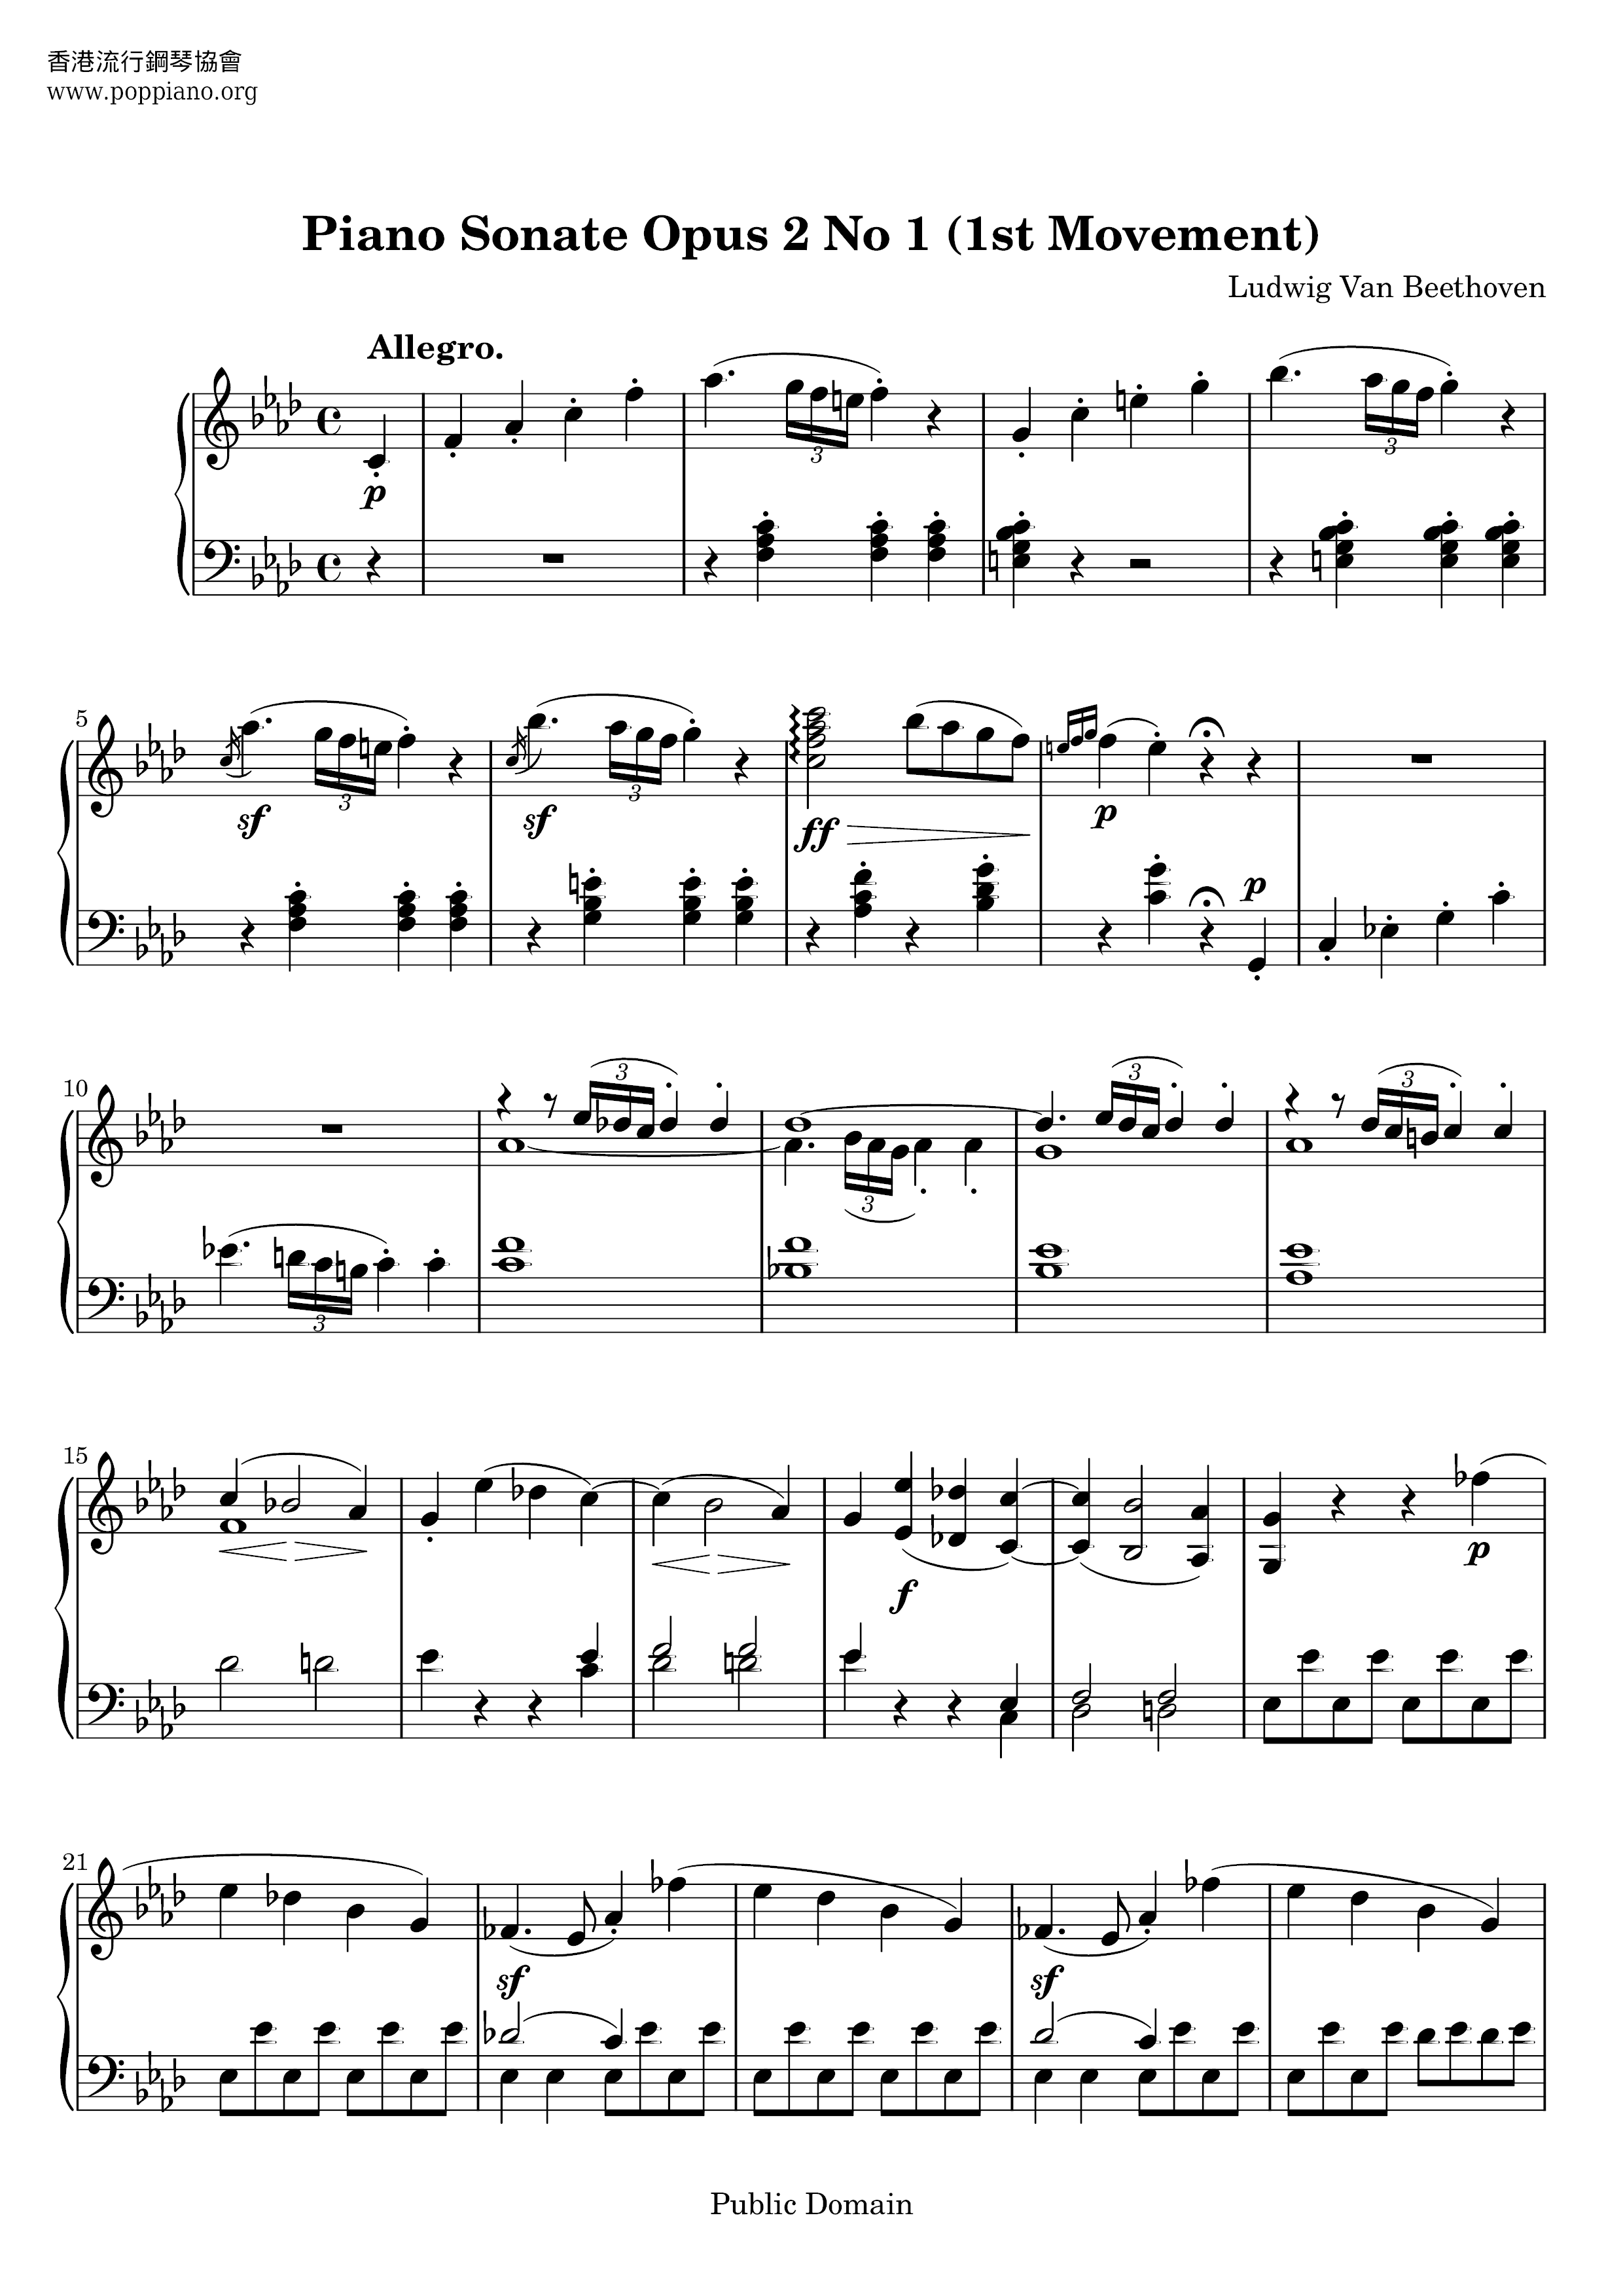 Piano Sonata Op. 2 No. 1 Score